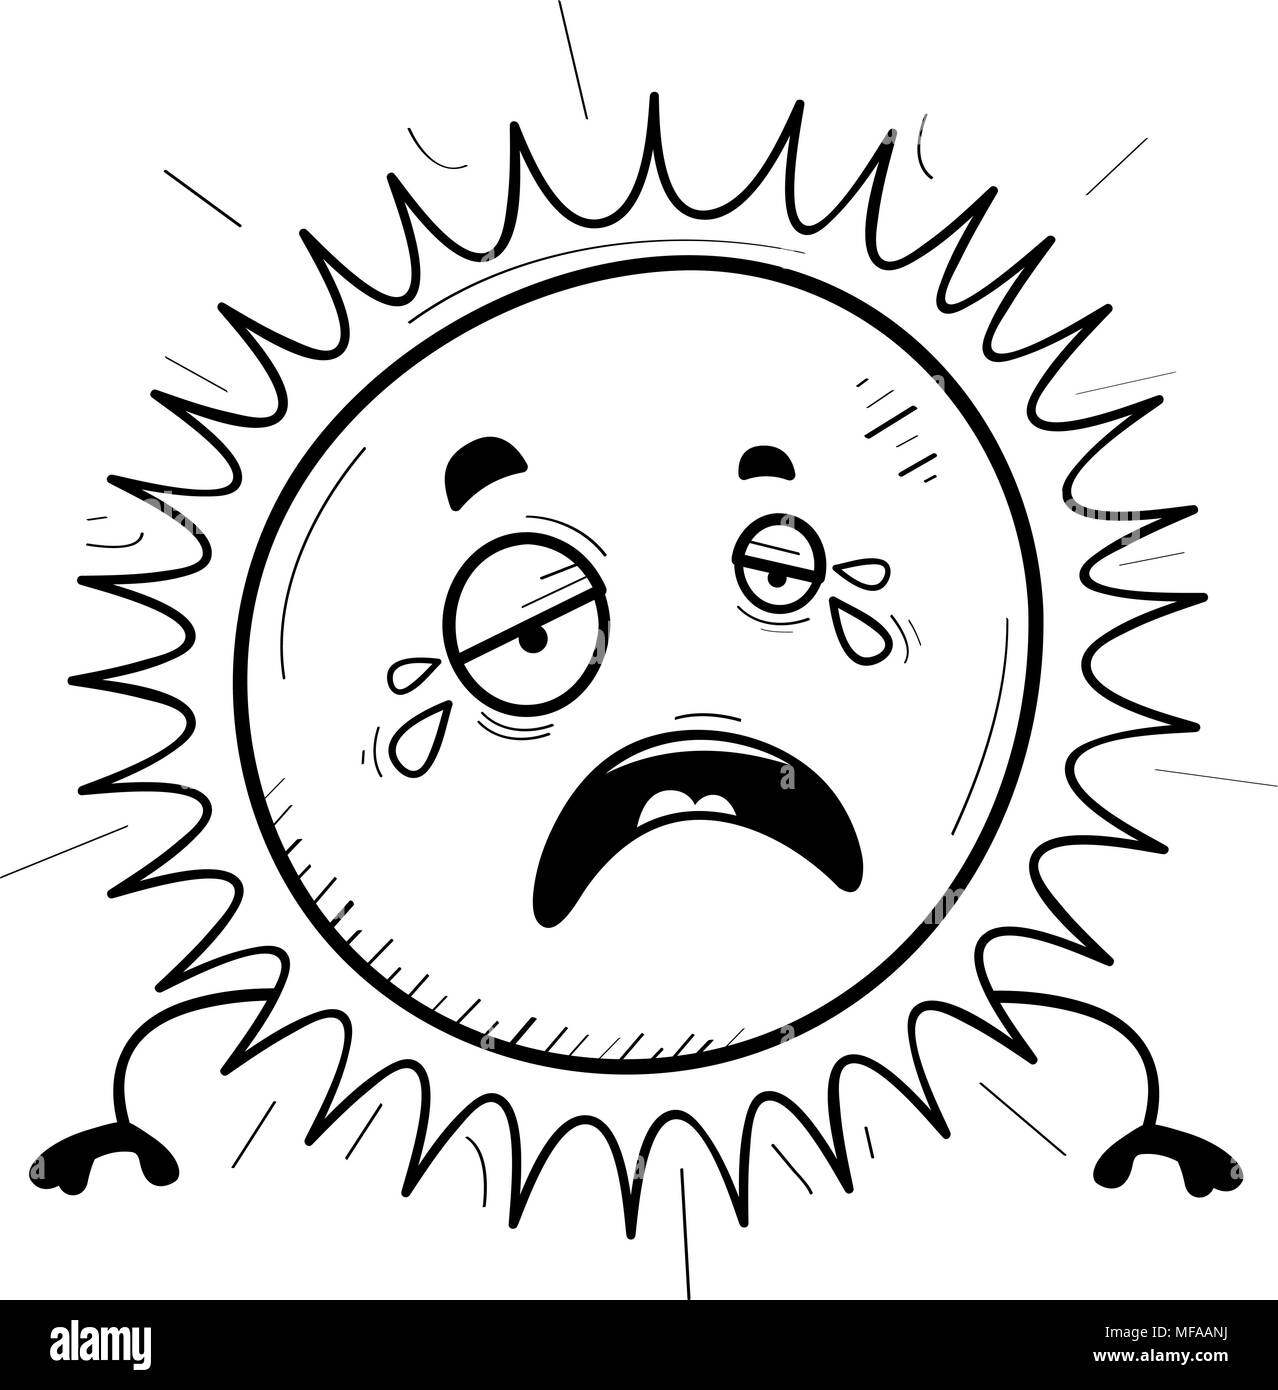 A cartoon illustration of the sun crying. Stock Vector